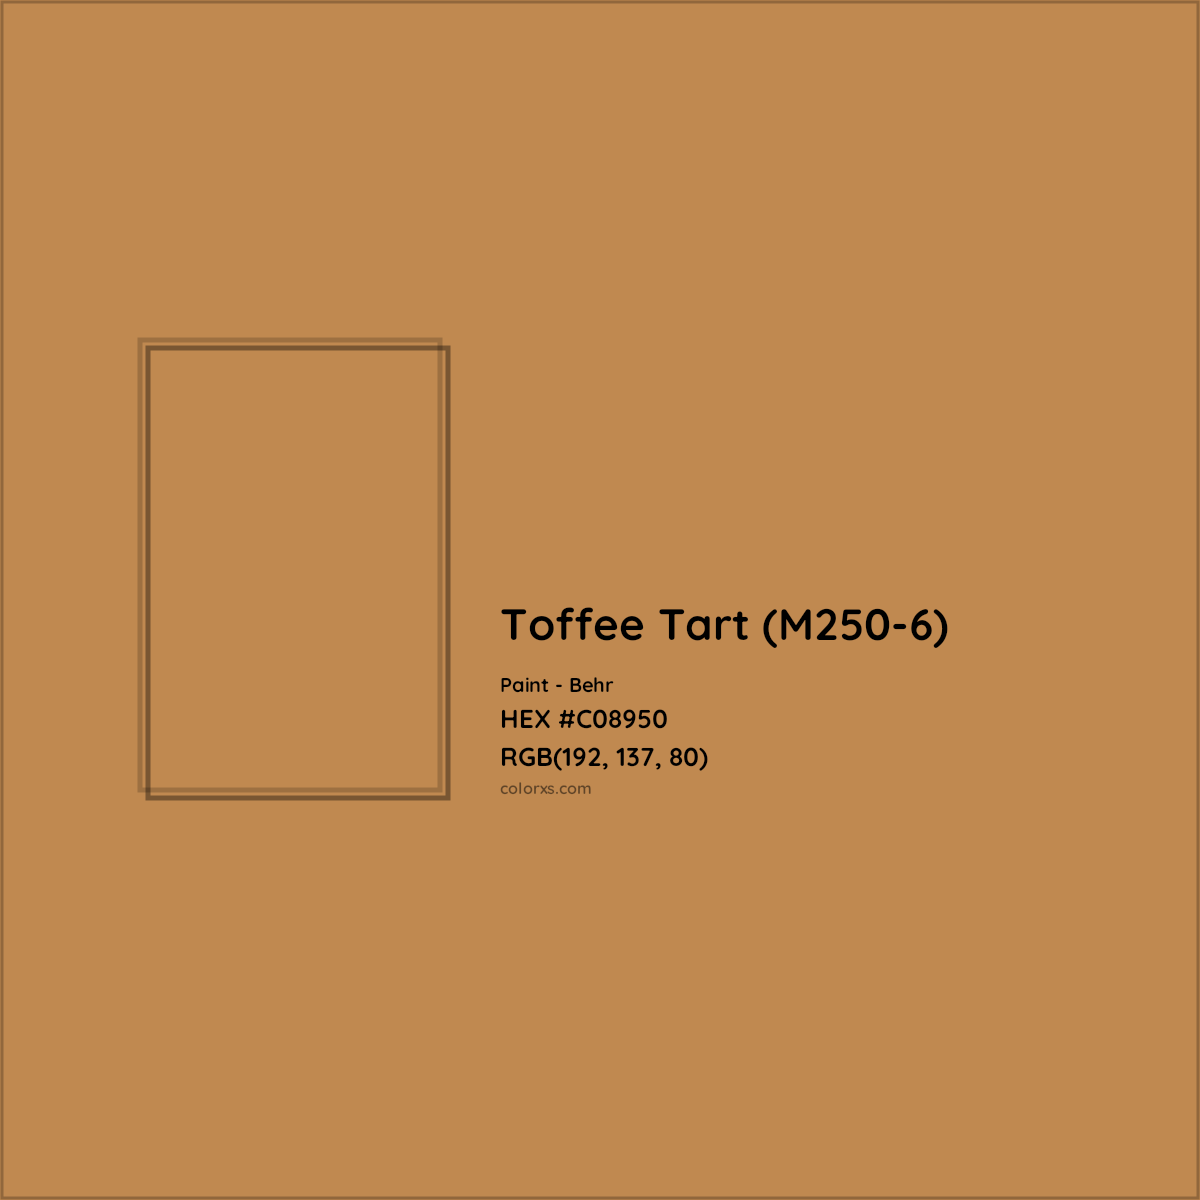 HEX #C08950 Toffee Tart (M250-6) Paint Behr - Color Code